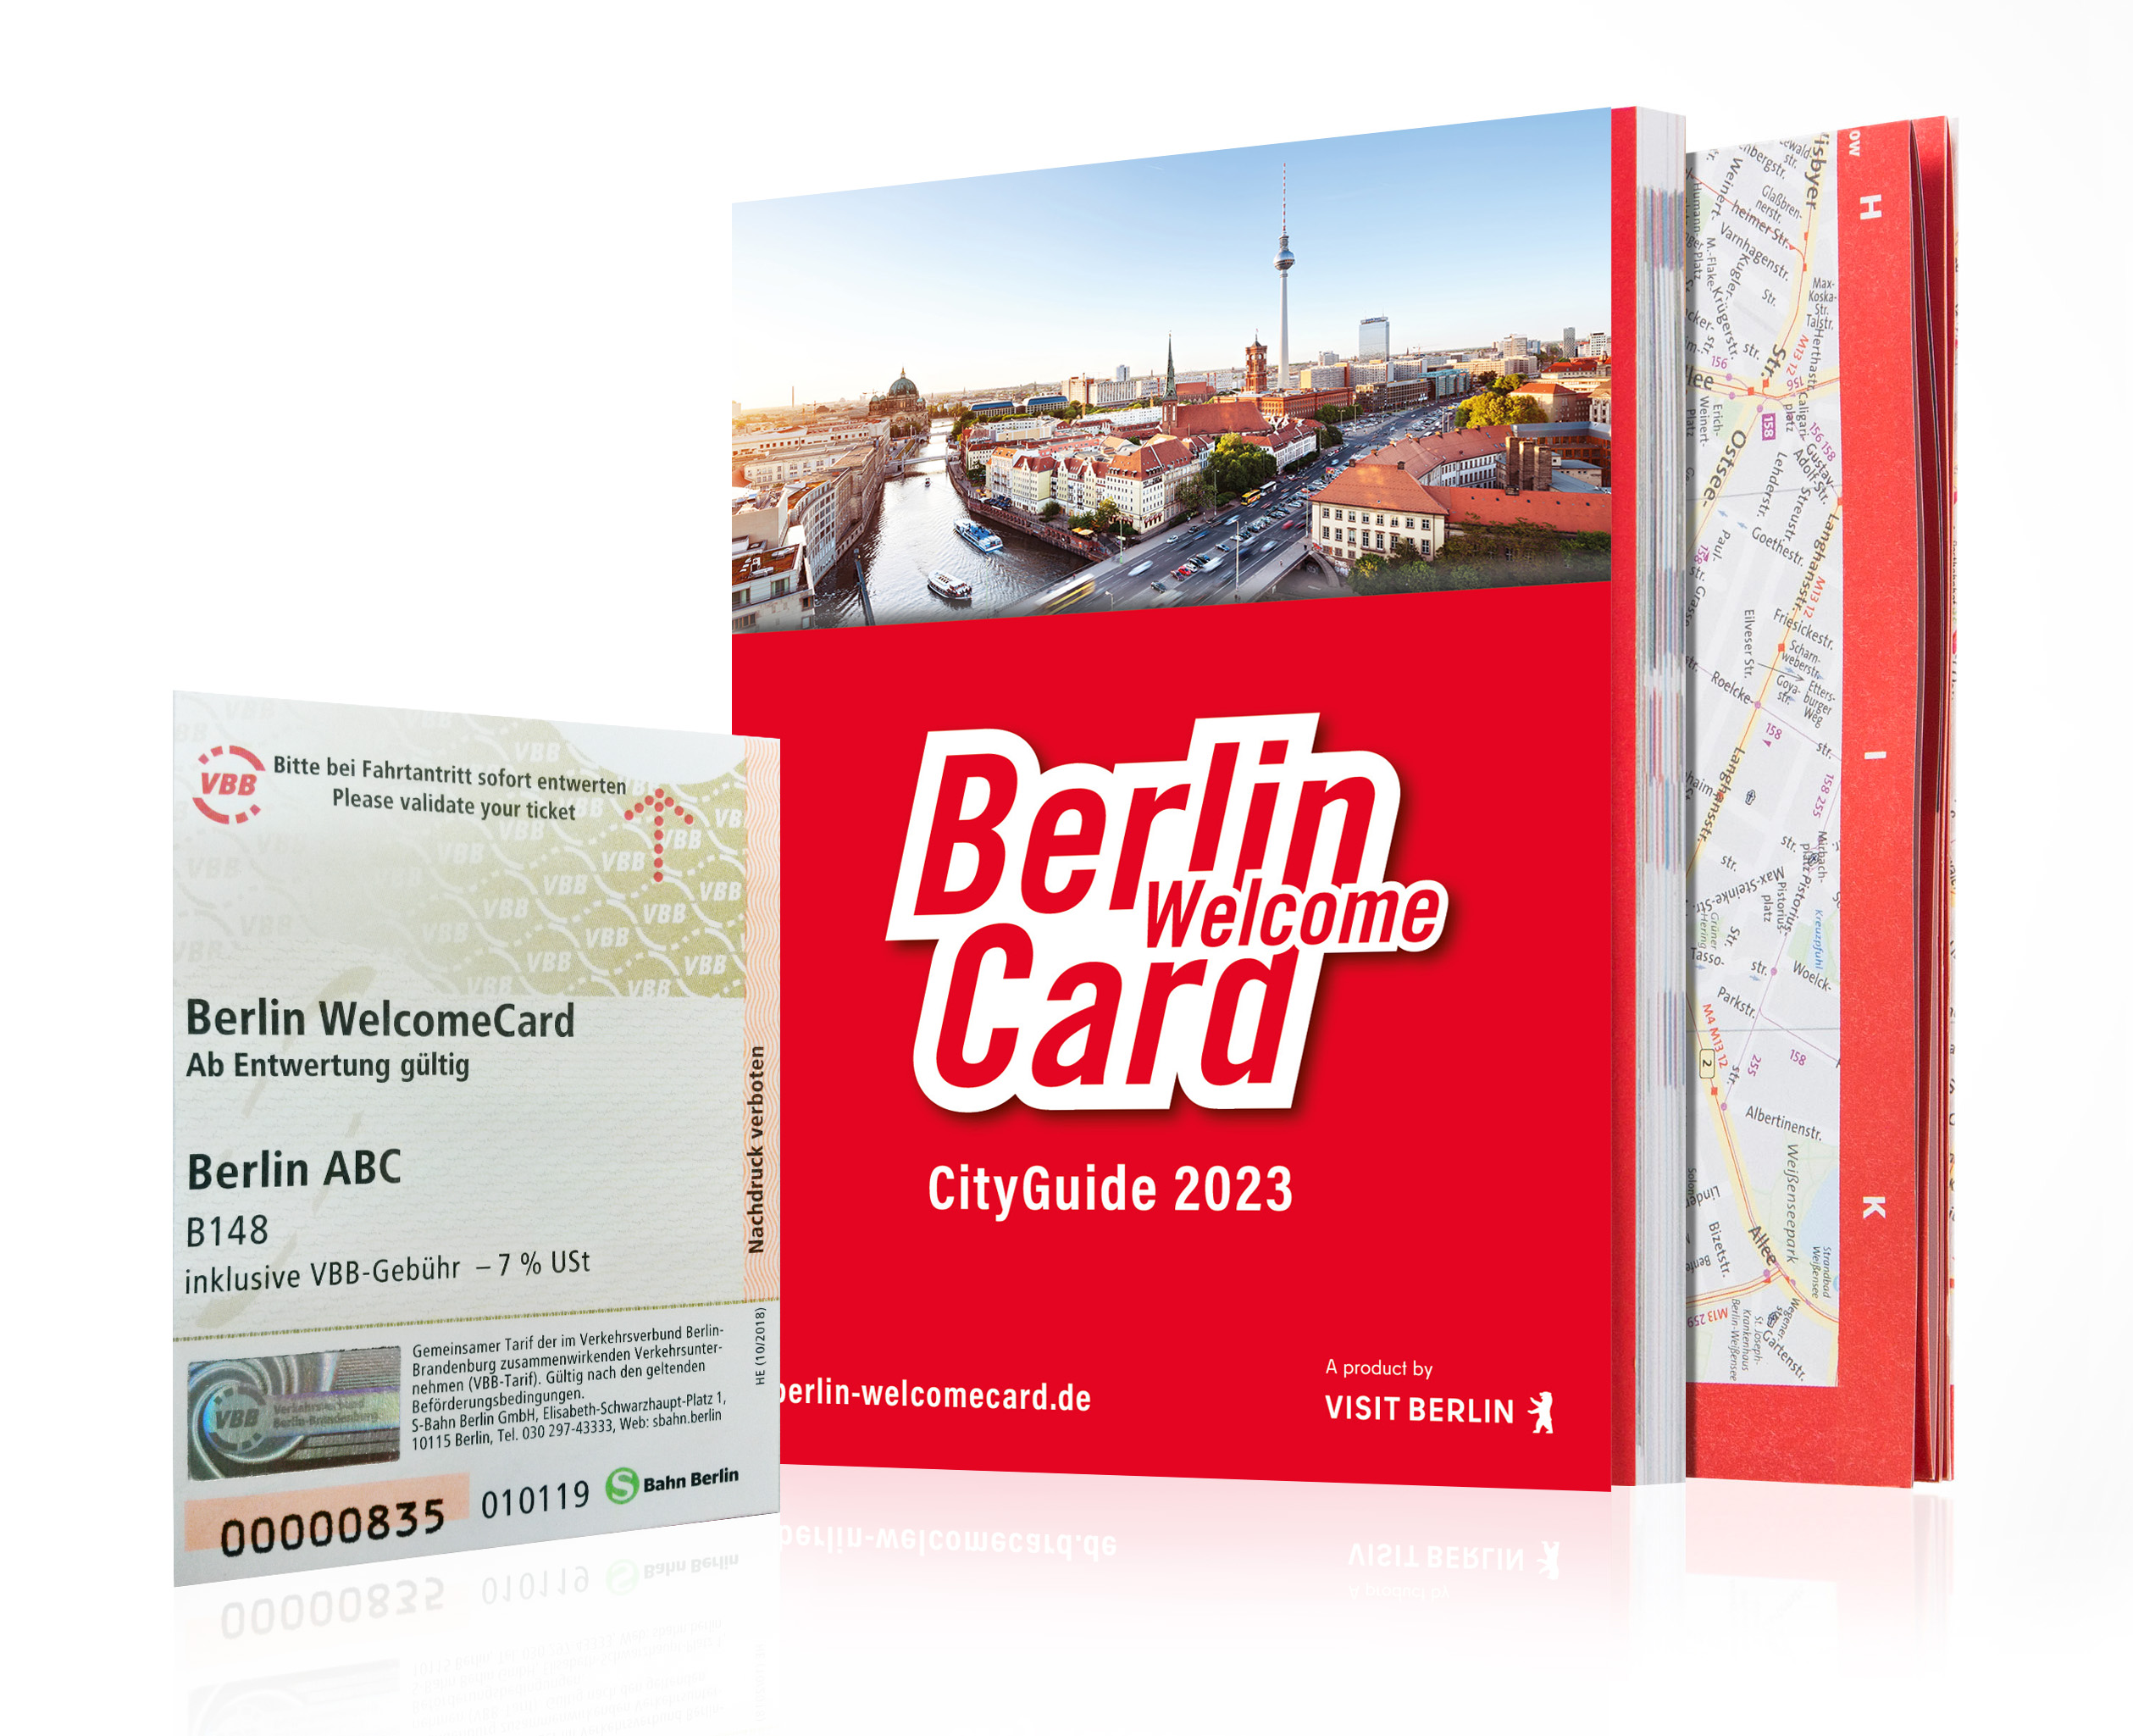 berlin city tour card und welcome card